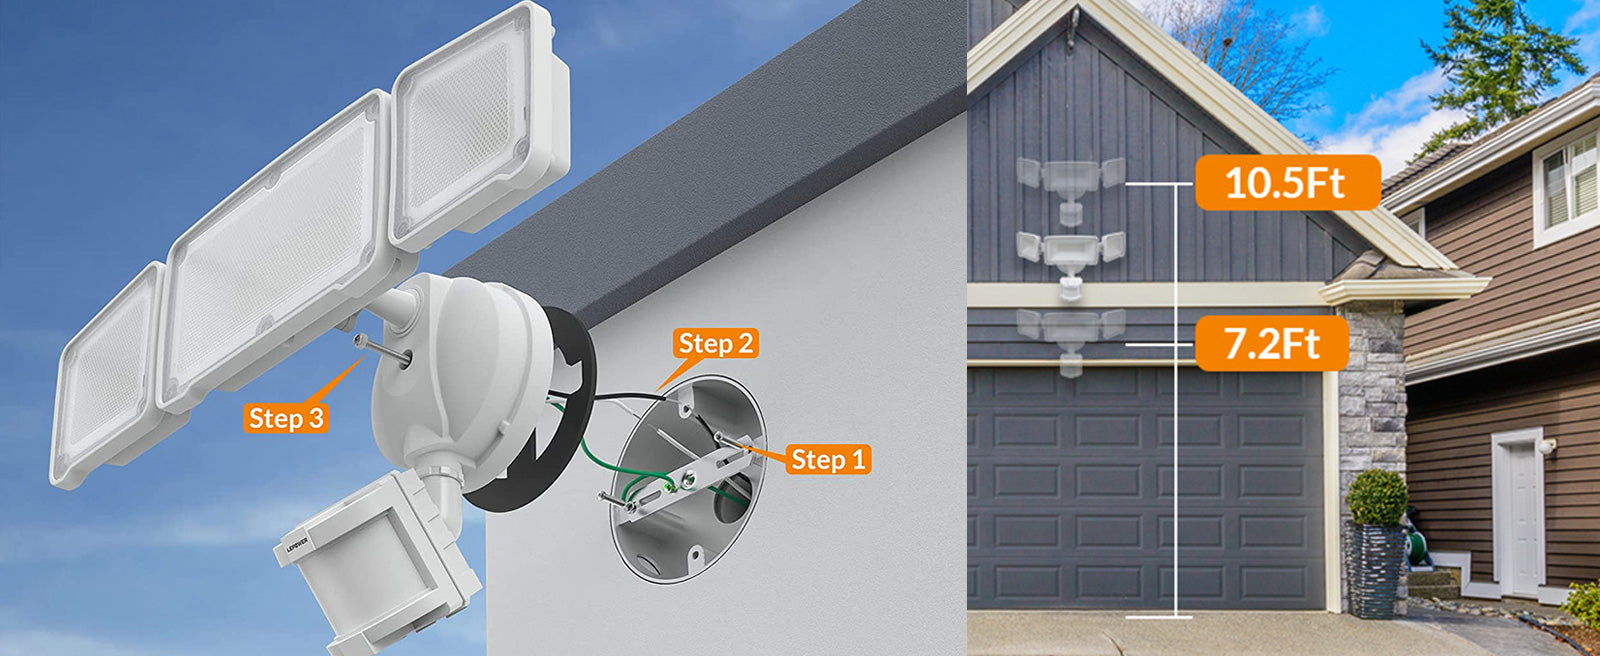 LEPOWER 35W Motion Sensor Security LED Light 3 heads wall mount easy install